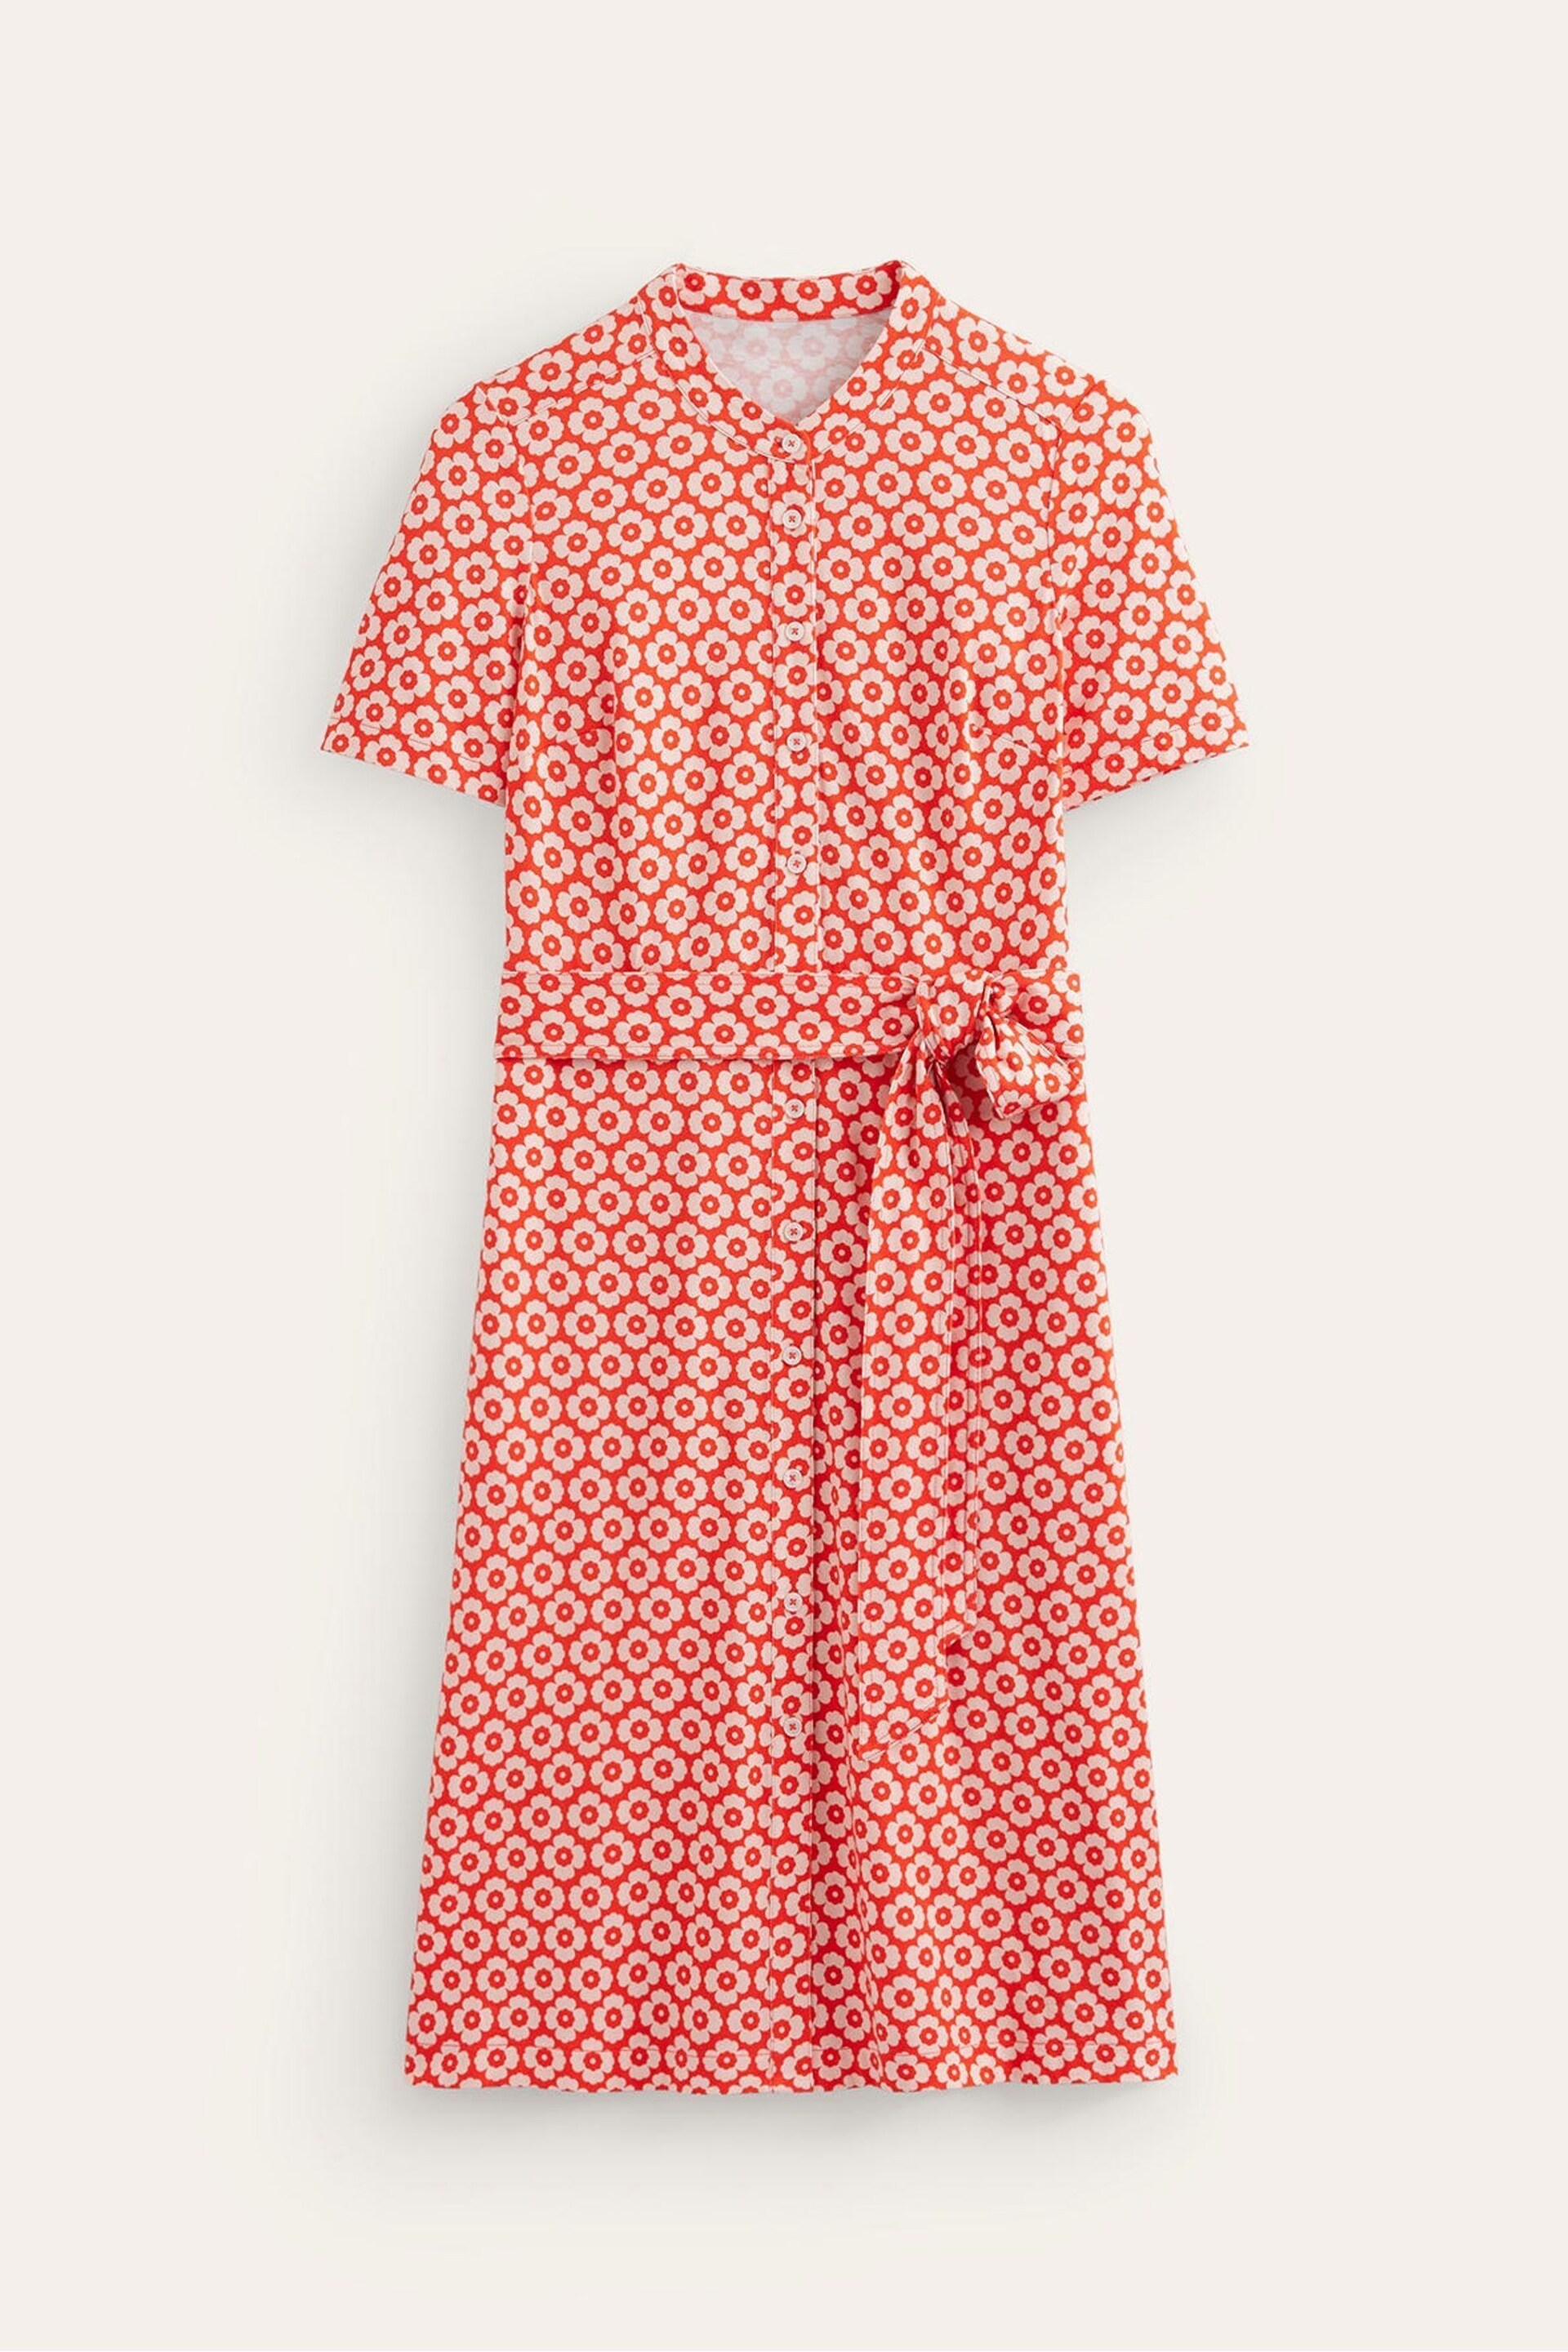 Boden Red Julia Short Sleeve Shirt Dress - Image 5 of 5